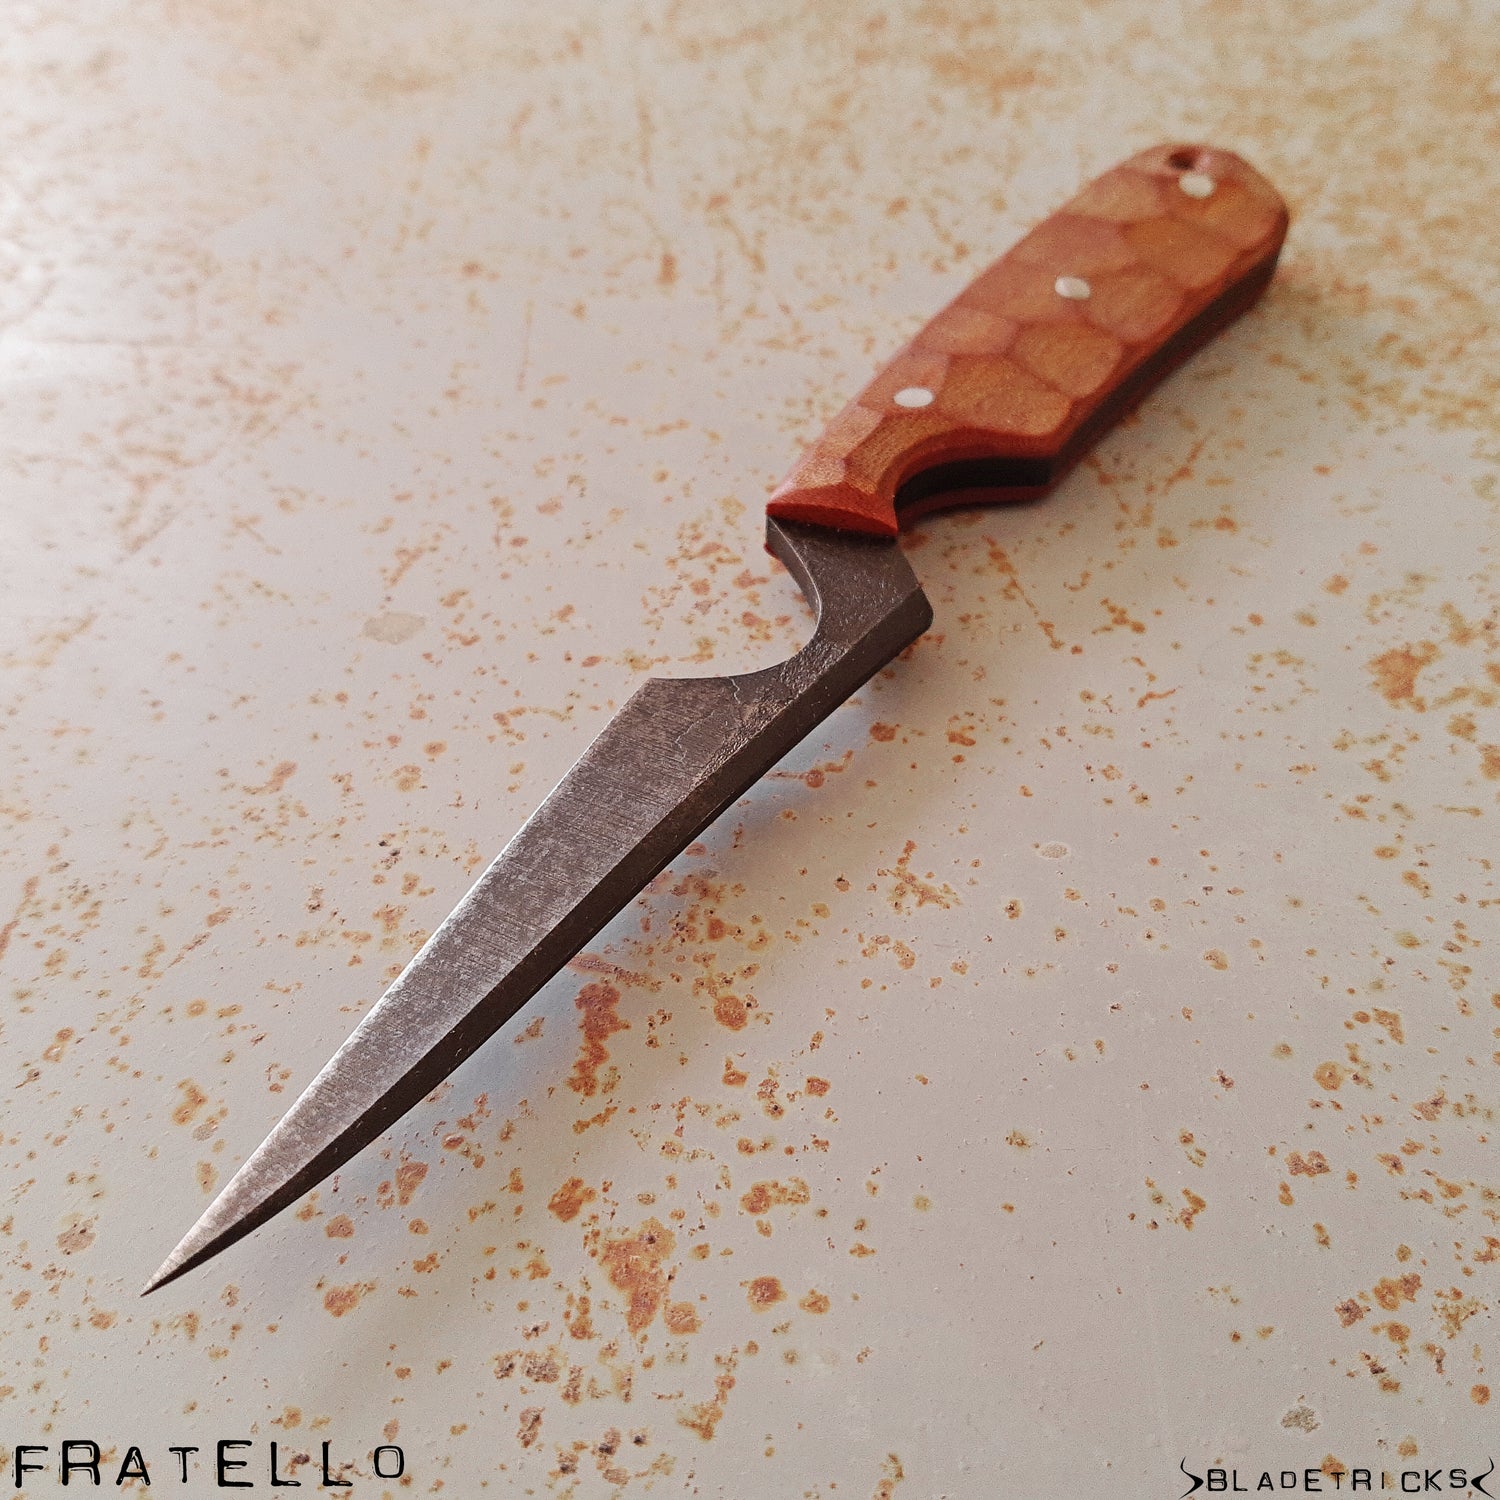 Best pikal reverse grip knife ever